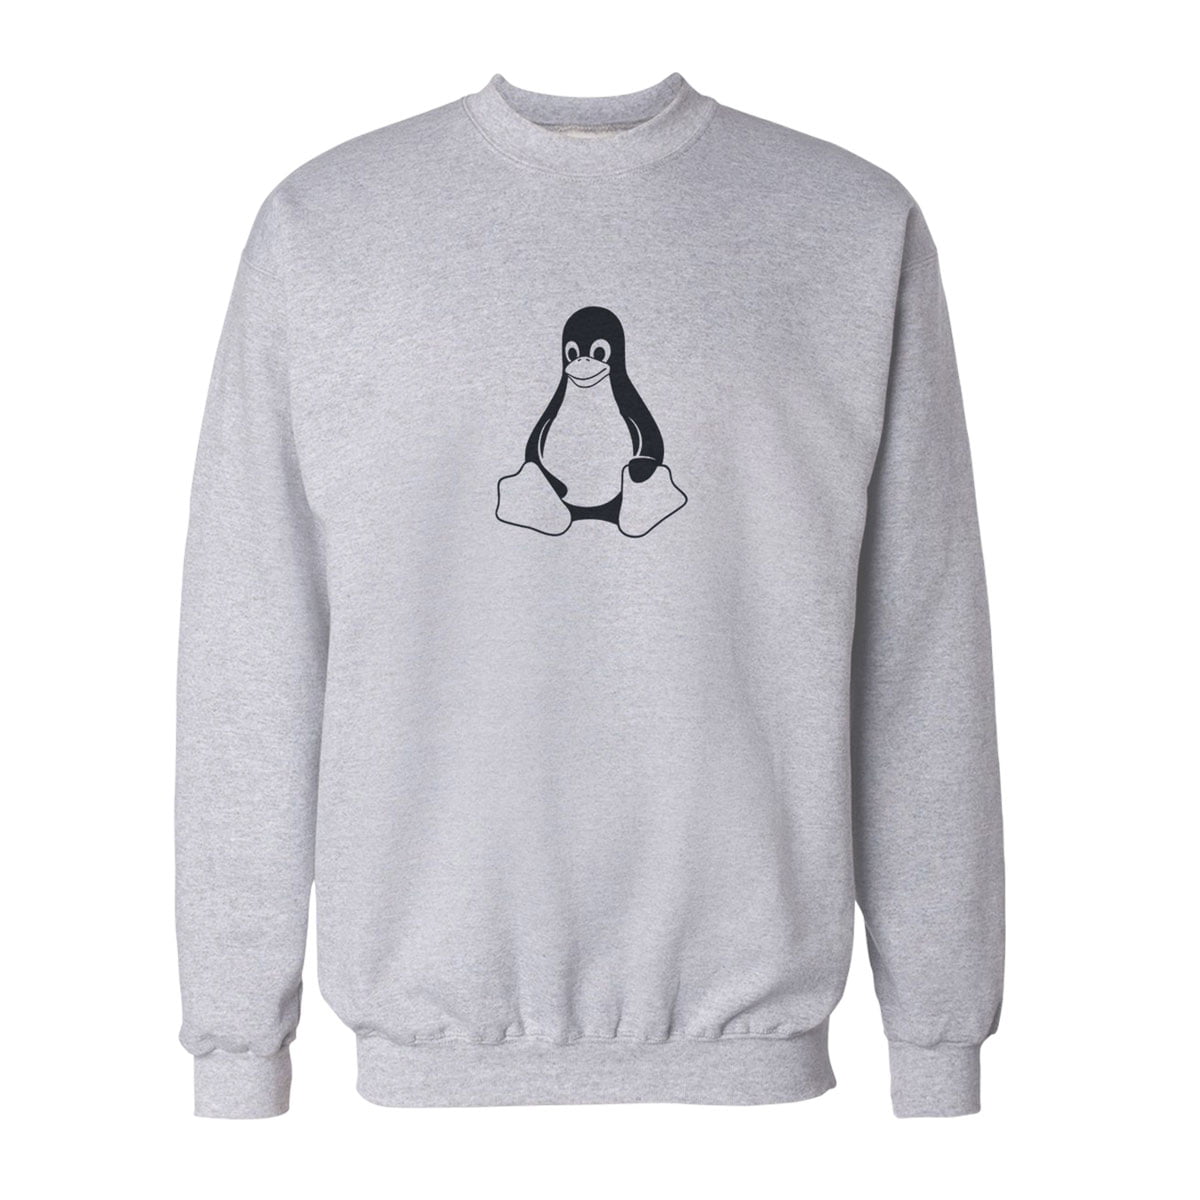 Bilisim Linux Sweatshirt B 2